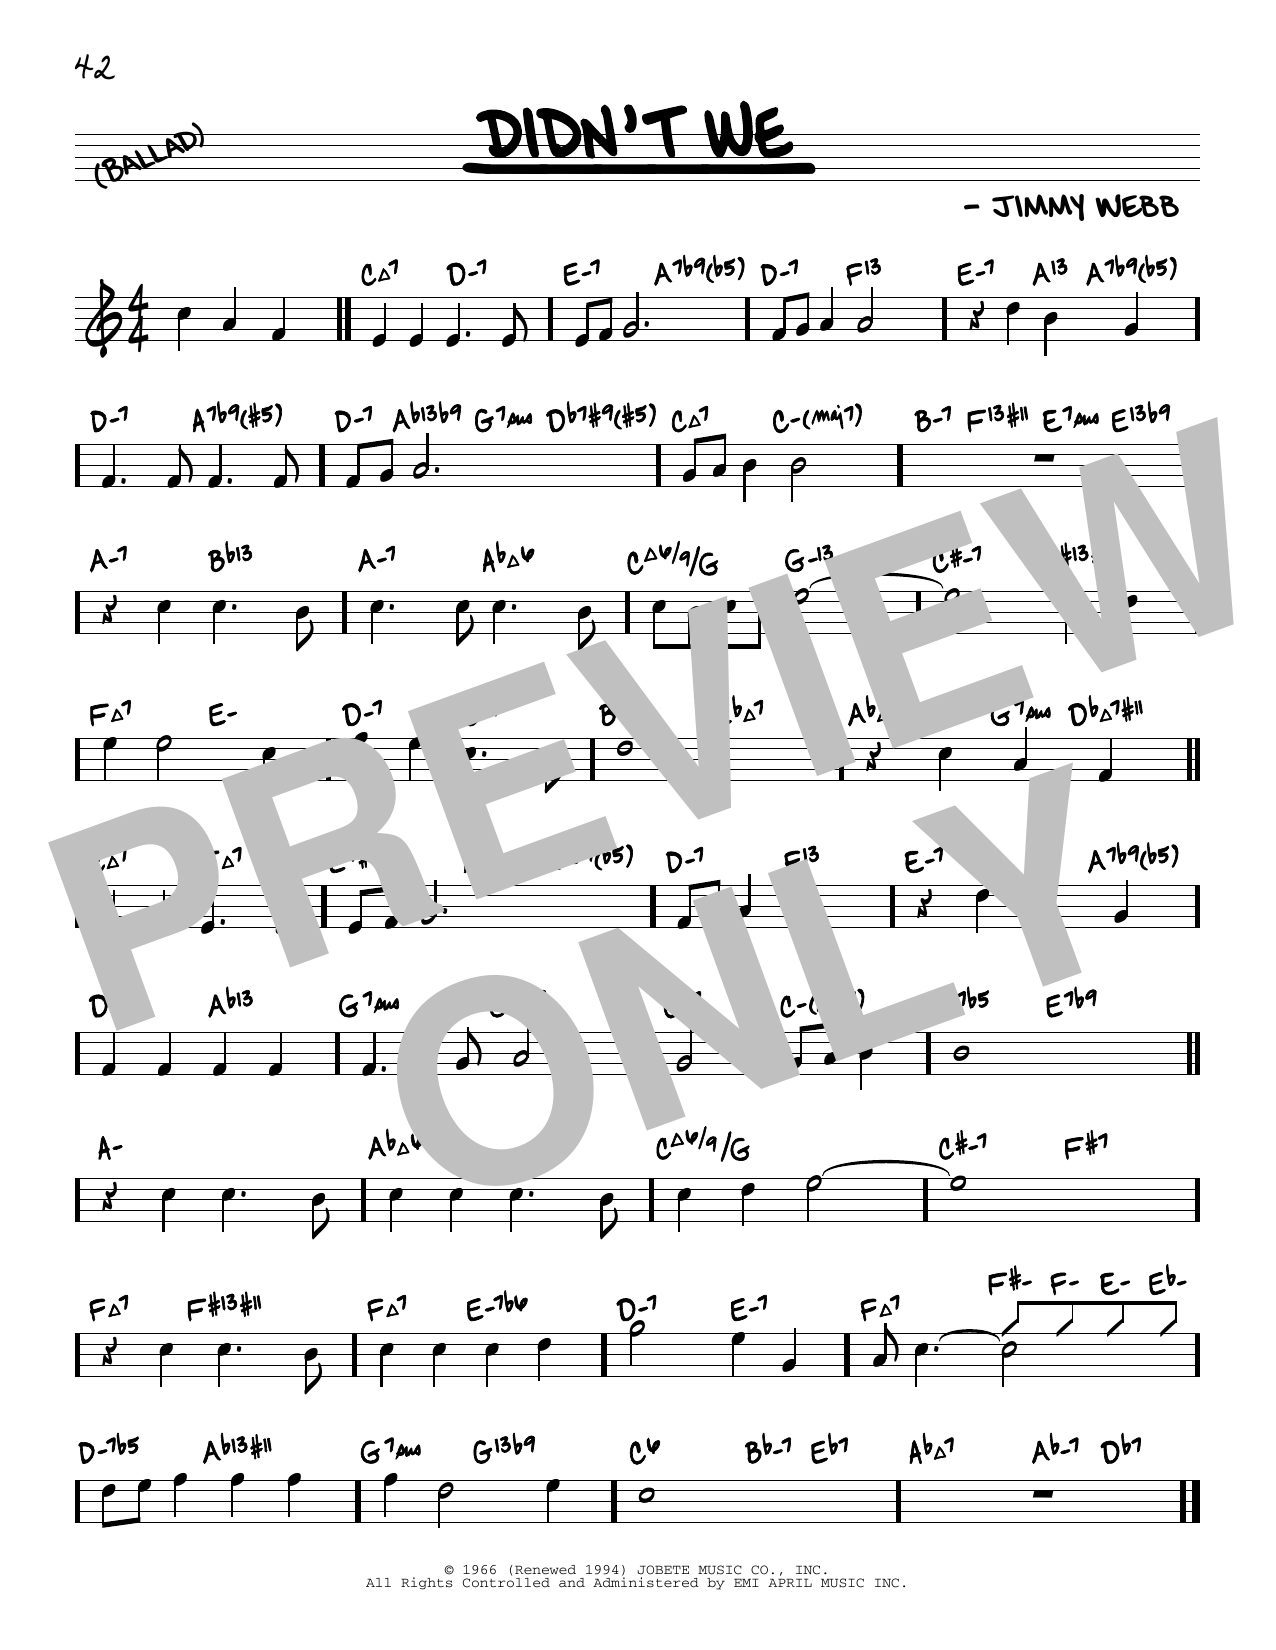 Jimmy Webb Didn't We (arr. David Hazeltine) Sheet Music Notes & Chords for Real Book – Enhanced Chords - Download or Print PDF